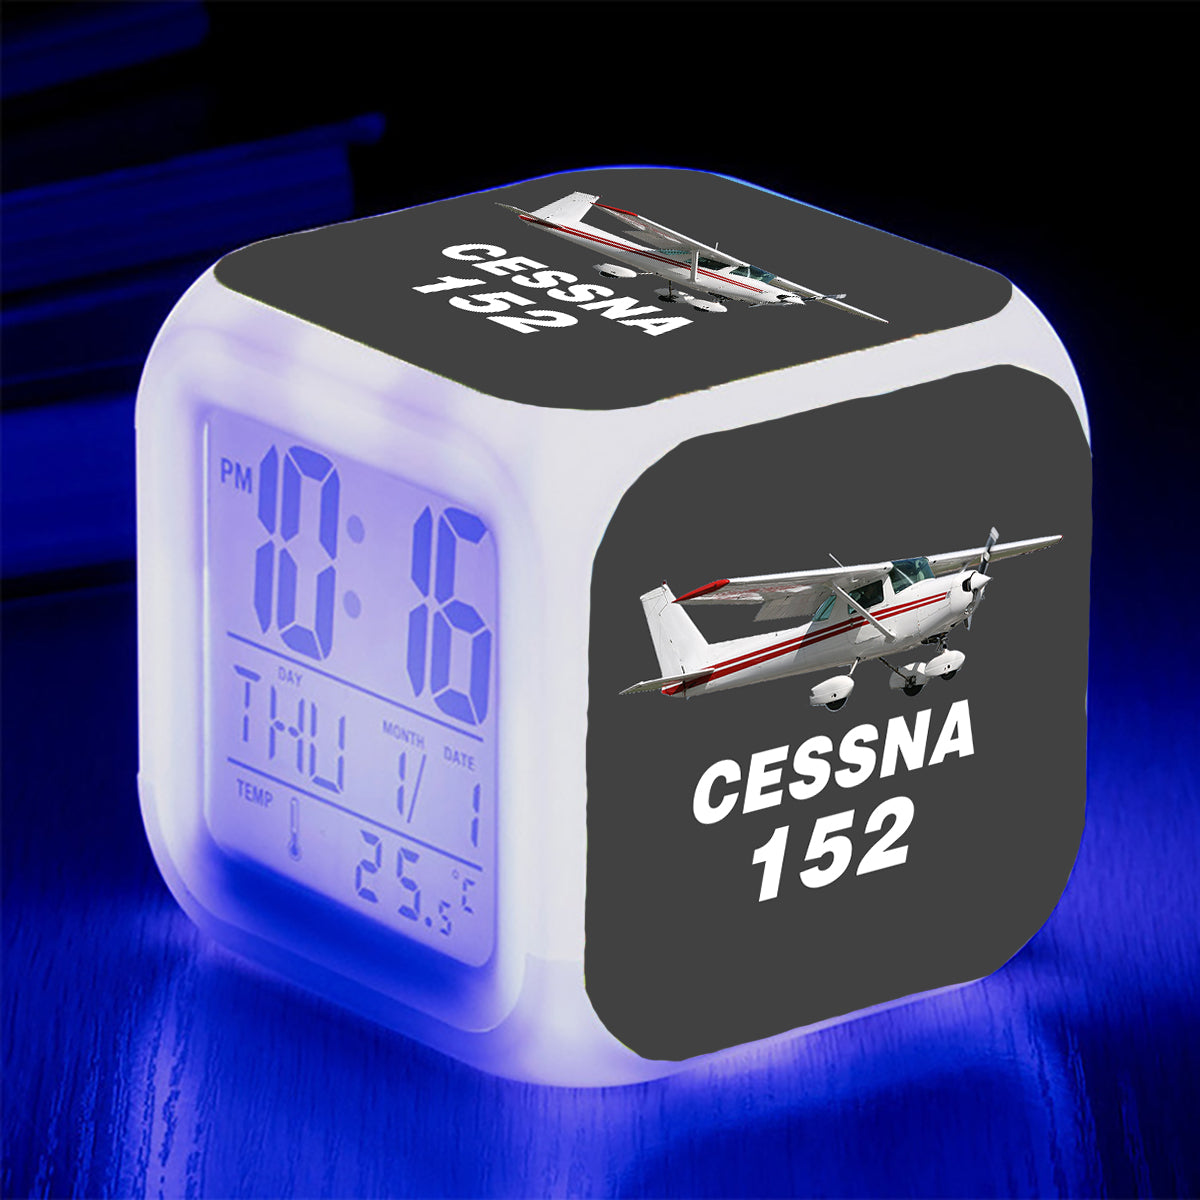 The Cessna 152 Designed "7 Colour" Digital Alarm Clock